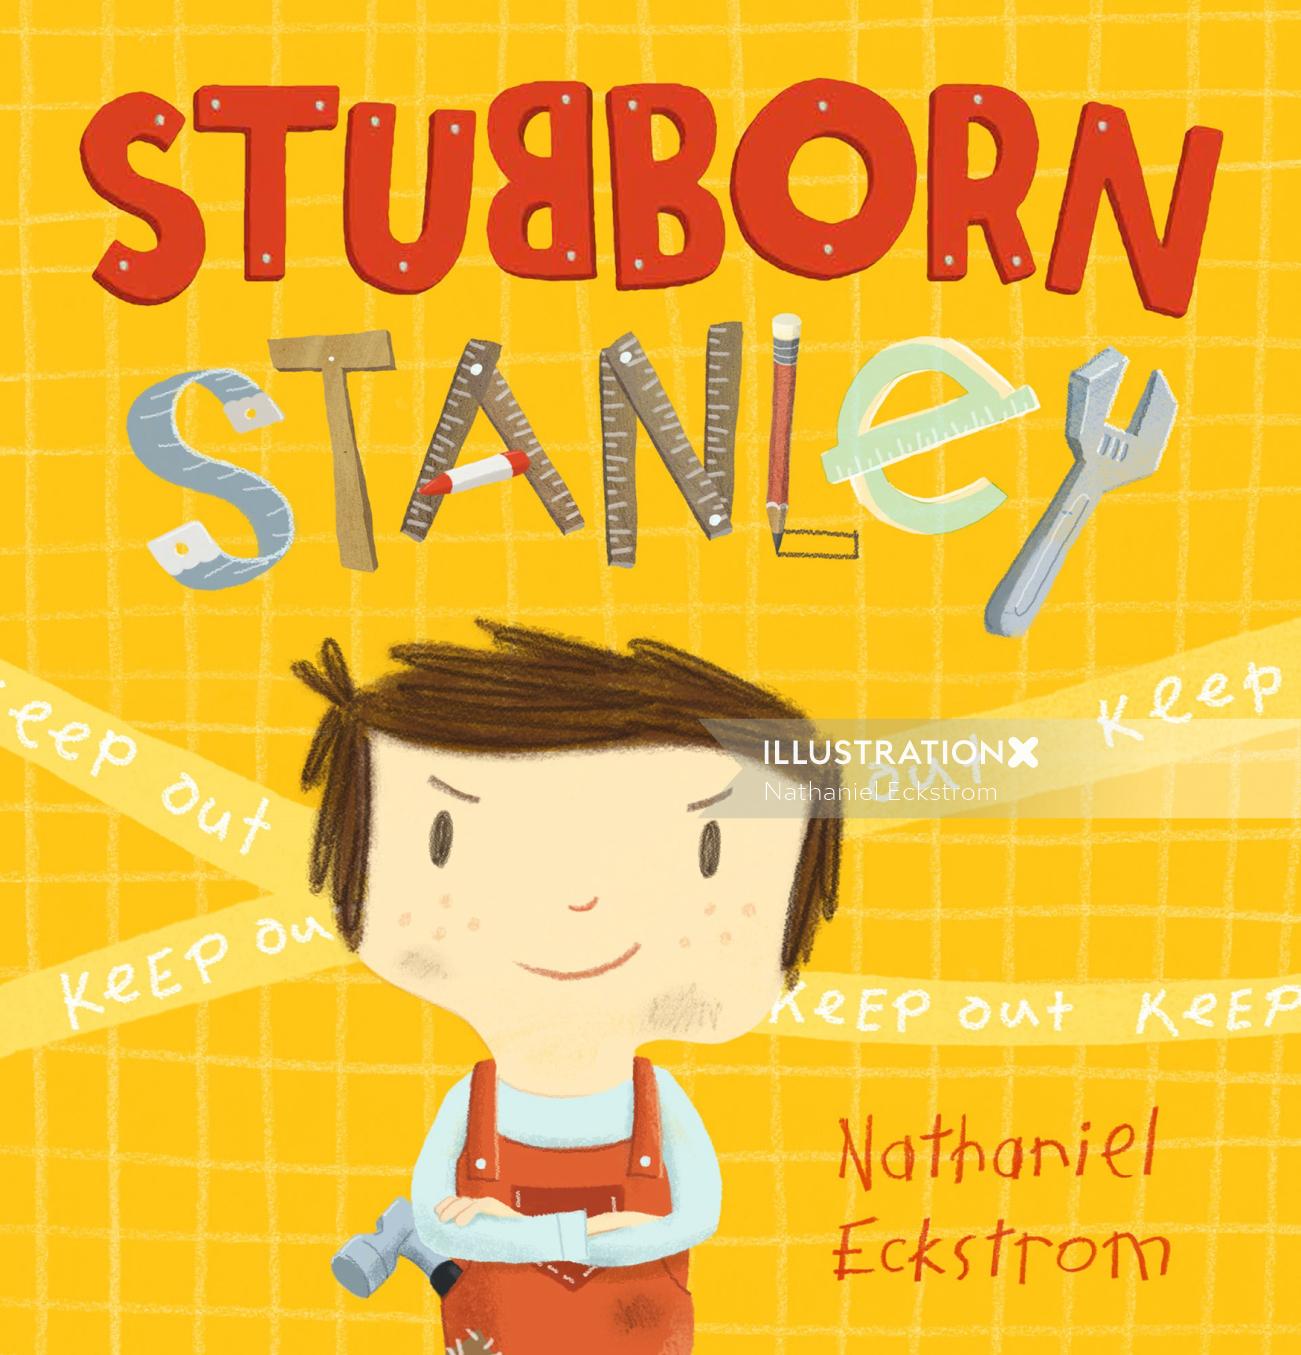 Book Cover Artwork For Stubborn Stanley